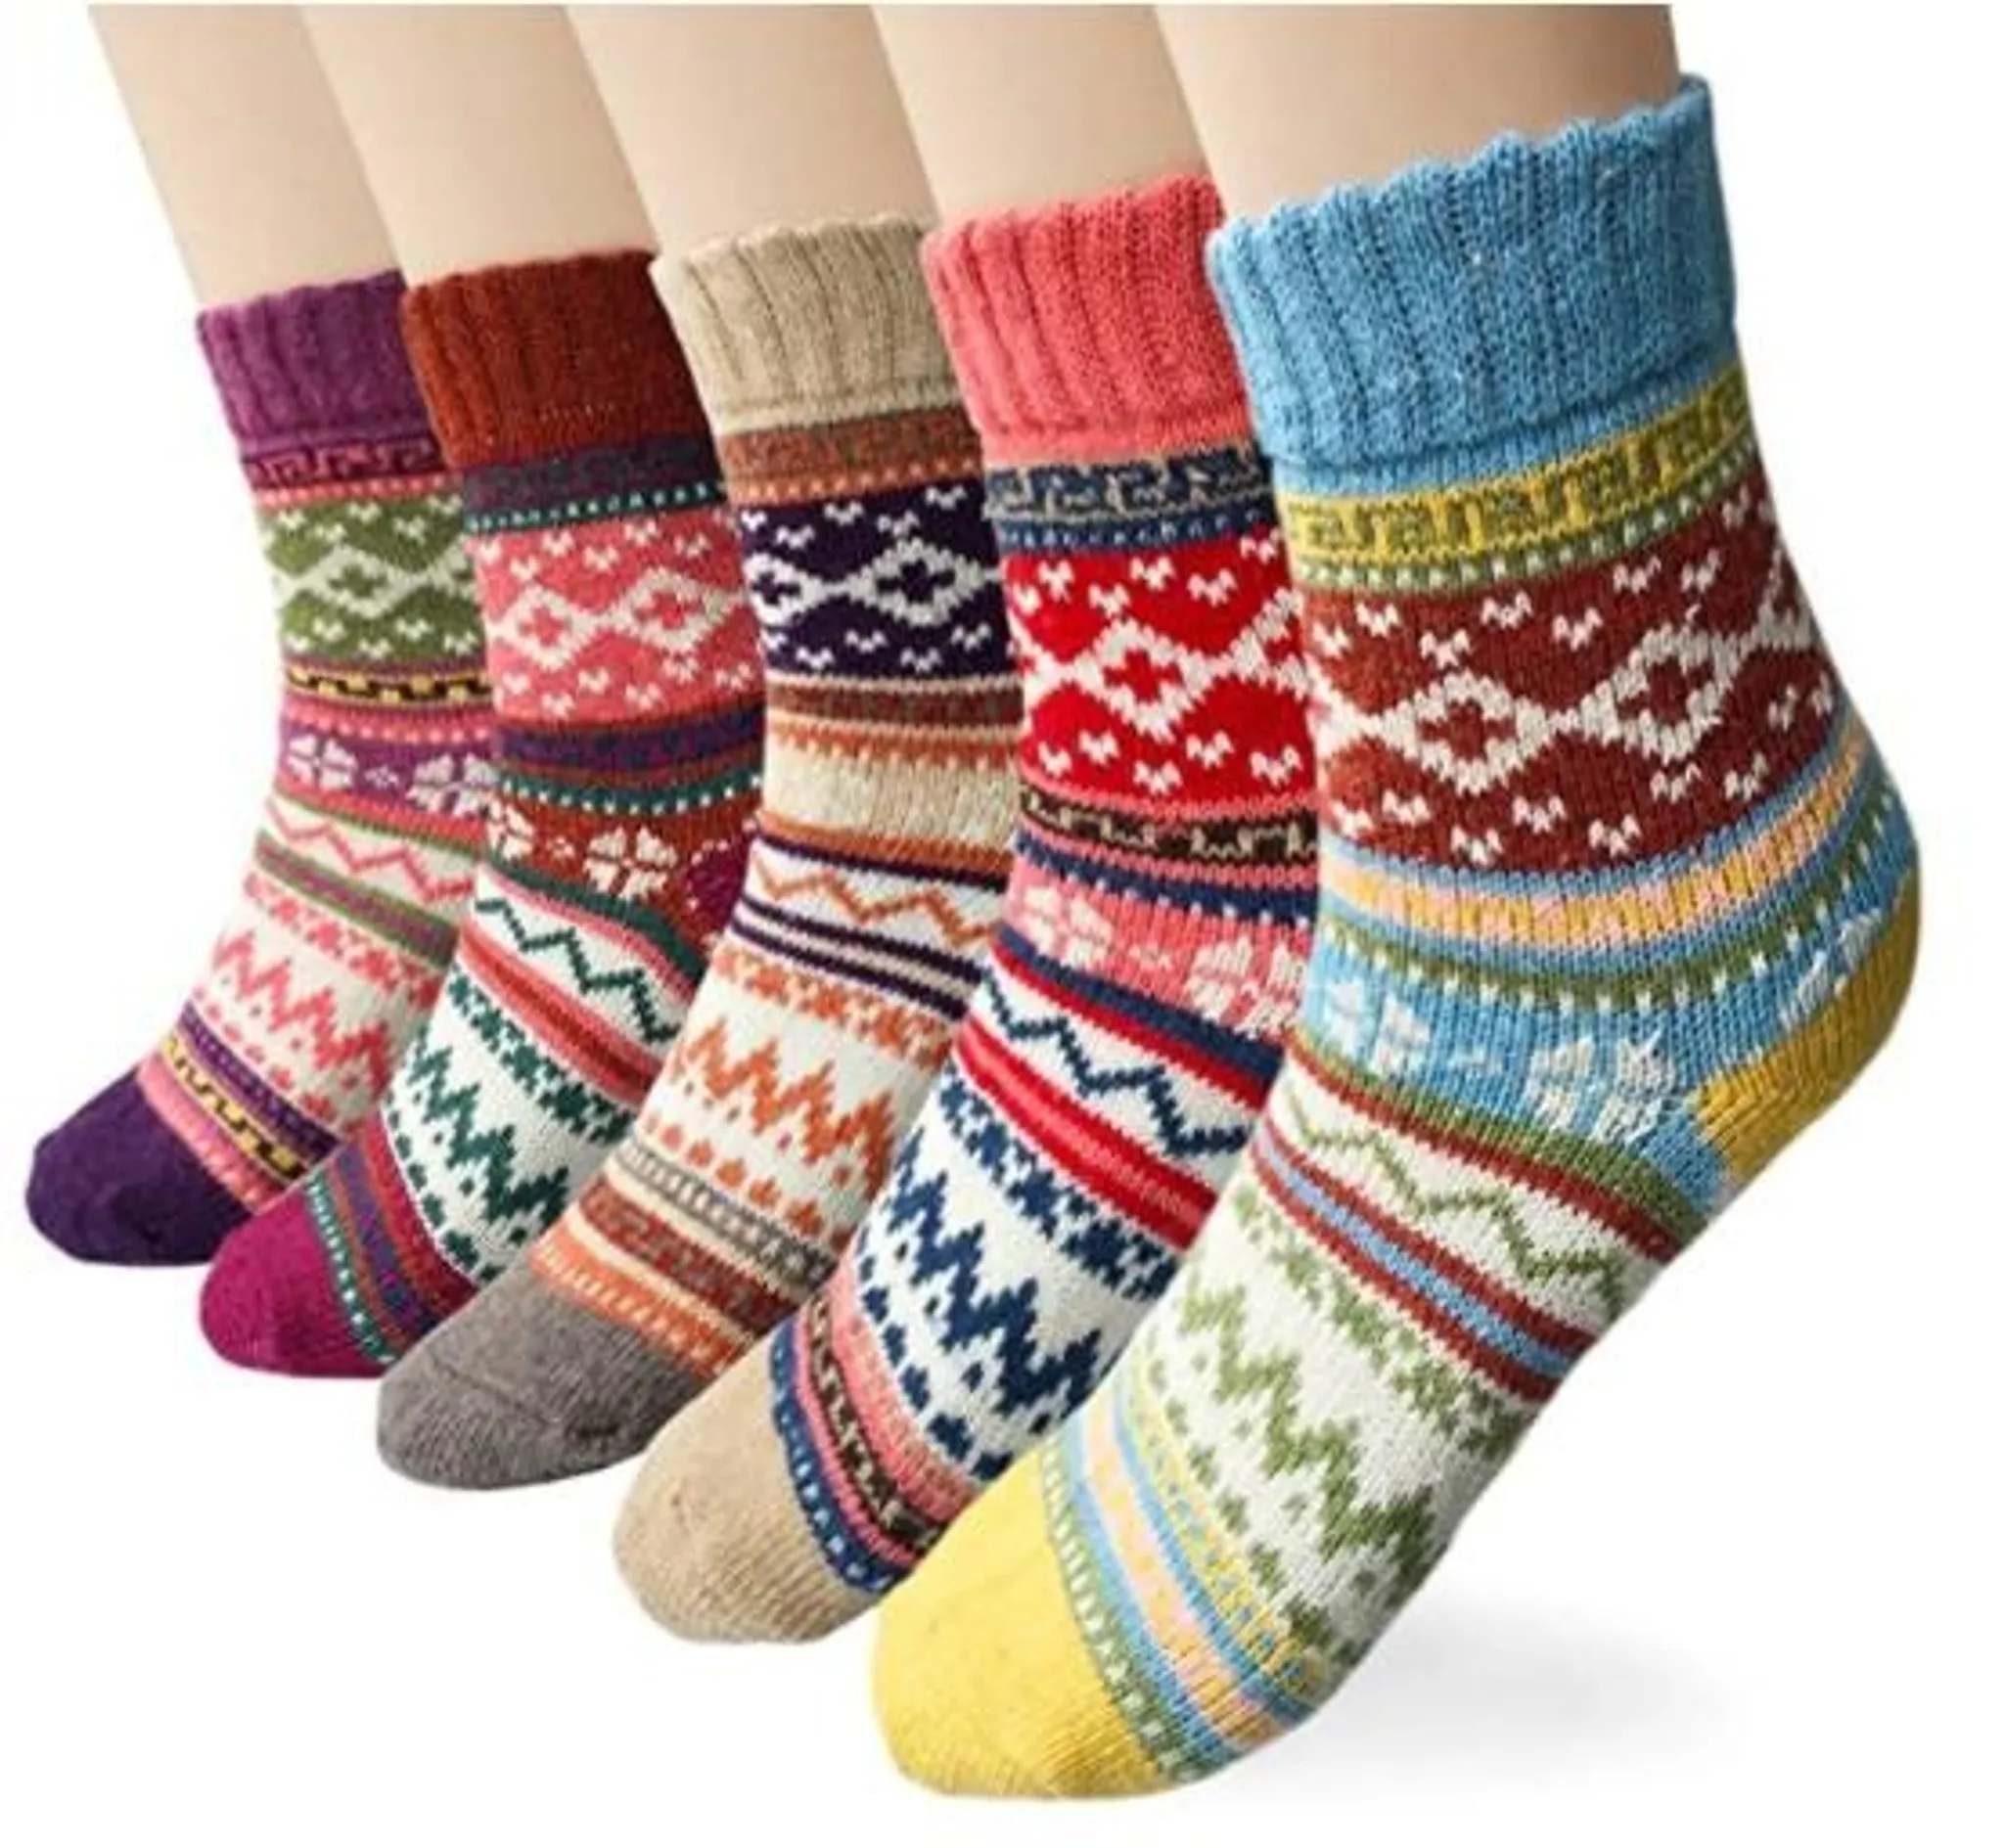 Теплые зимние носки